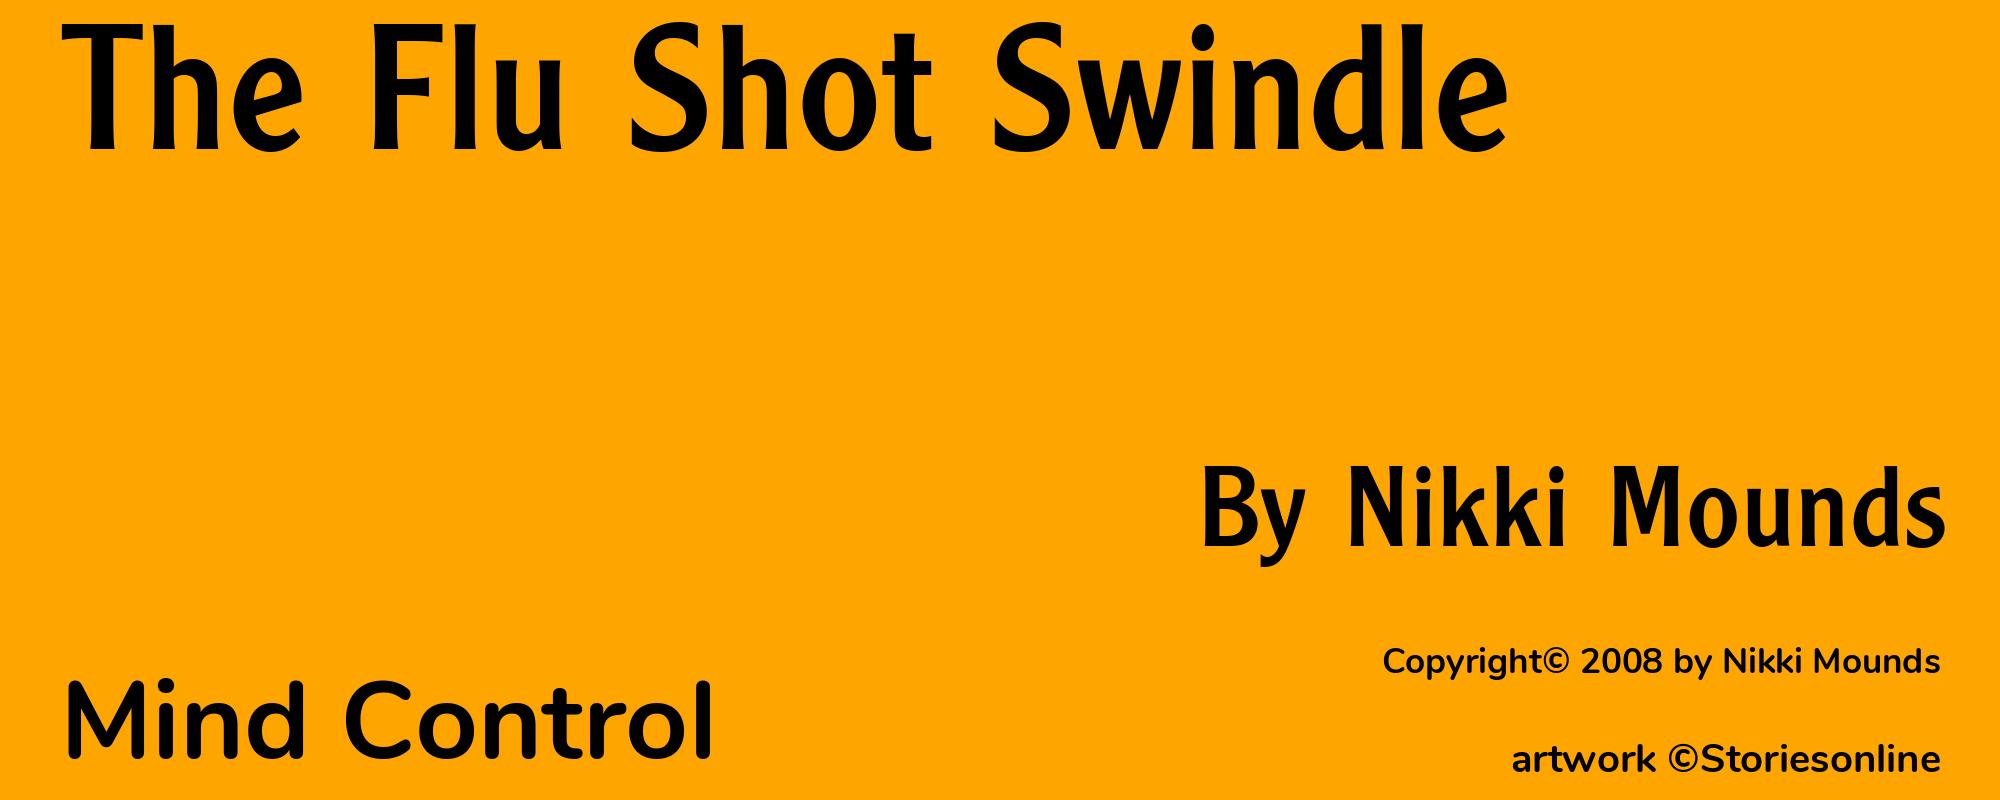 The Flu Shot Swindle - Cover